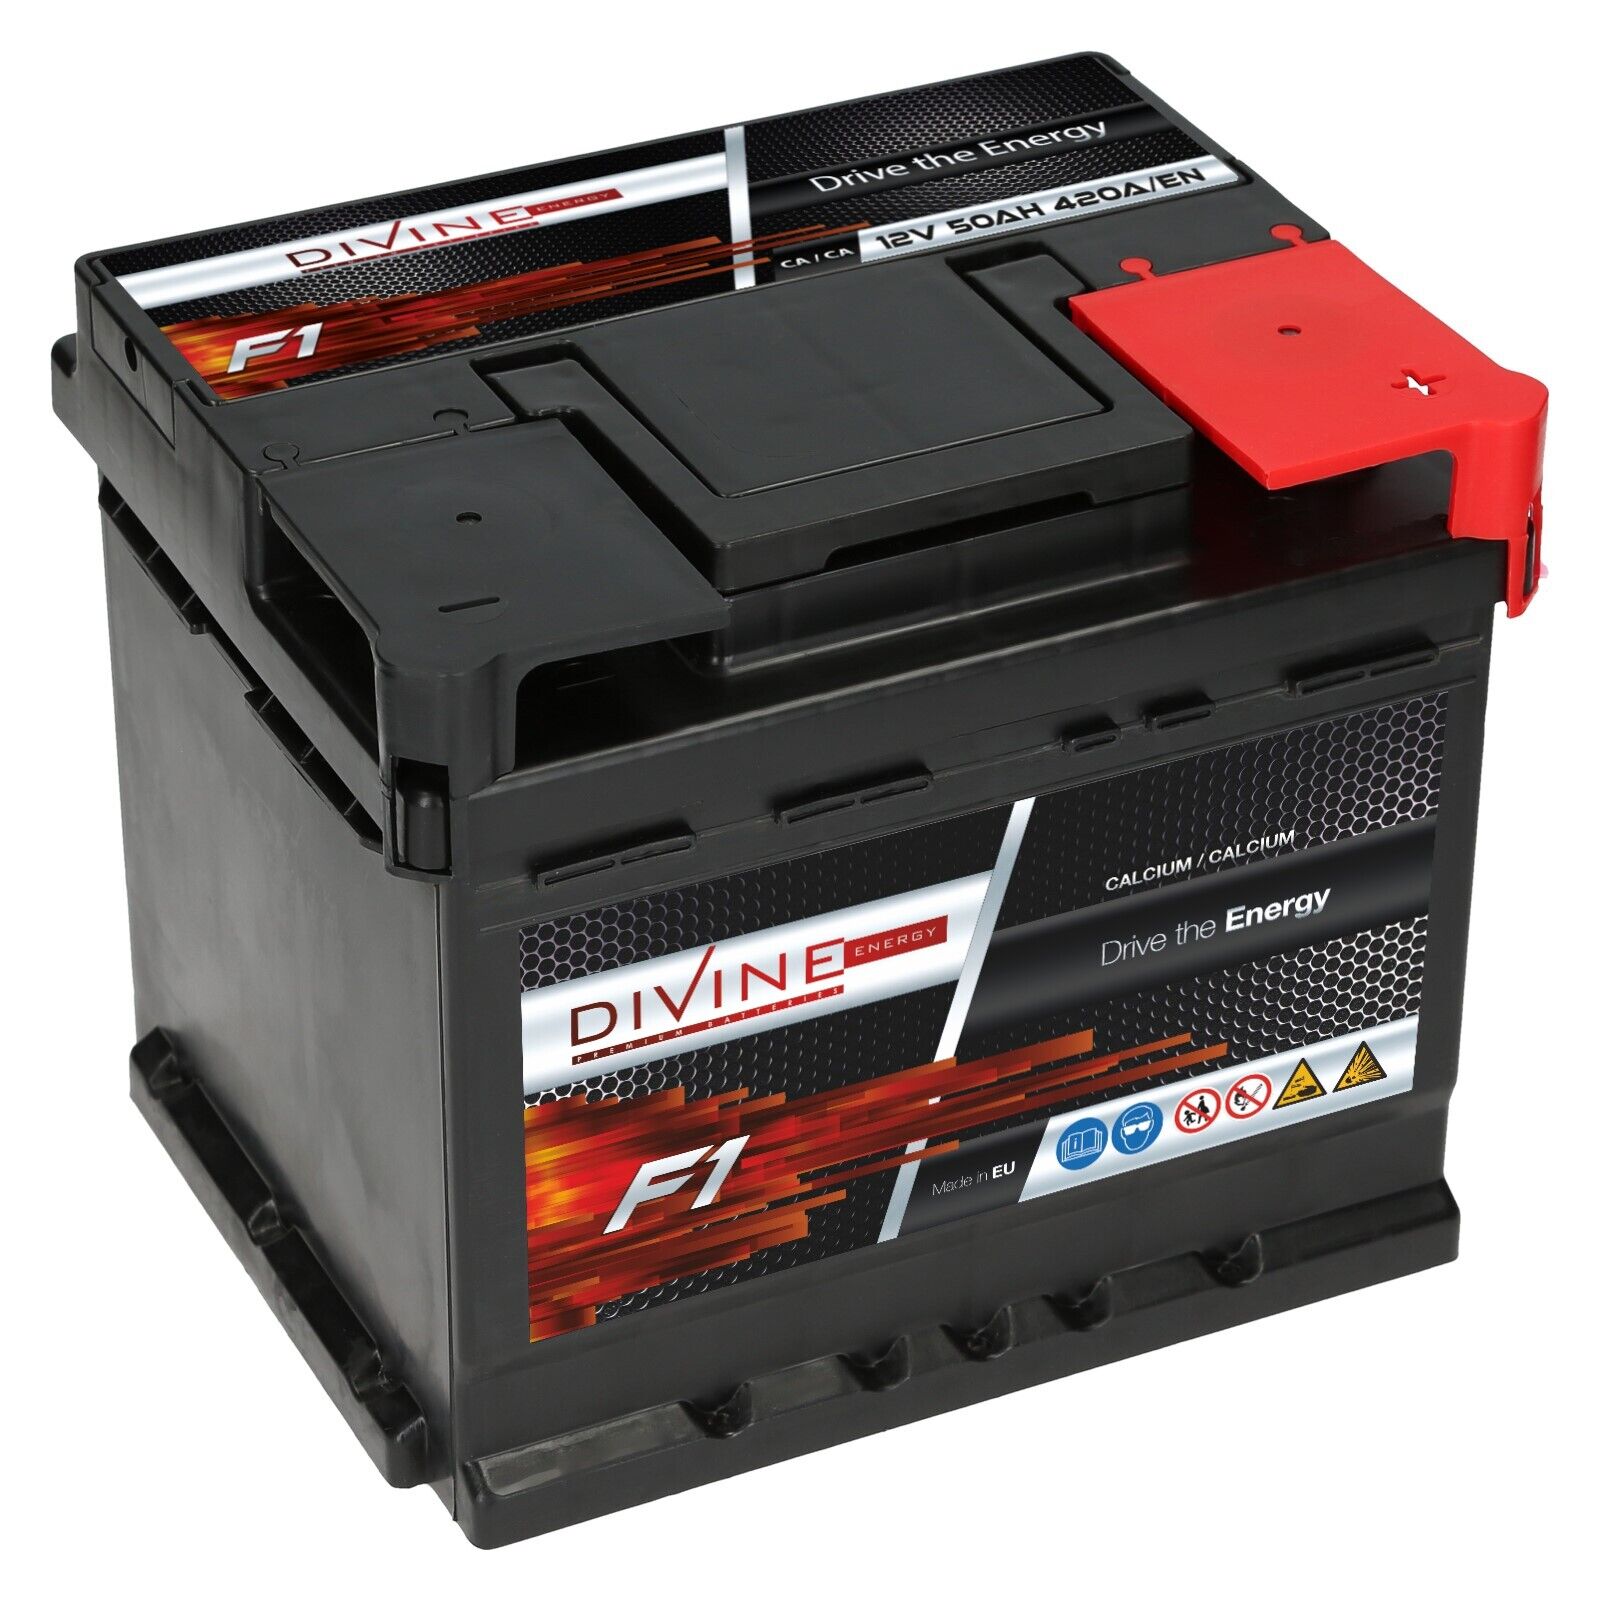 50 100 200 300a Autobatterie Rennen Rallye-Schalter 12V Batterie